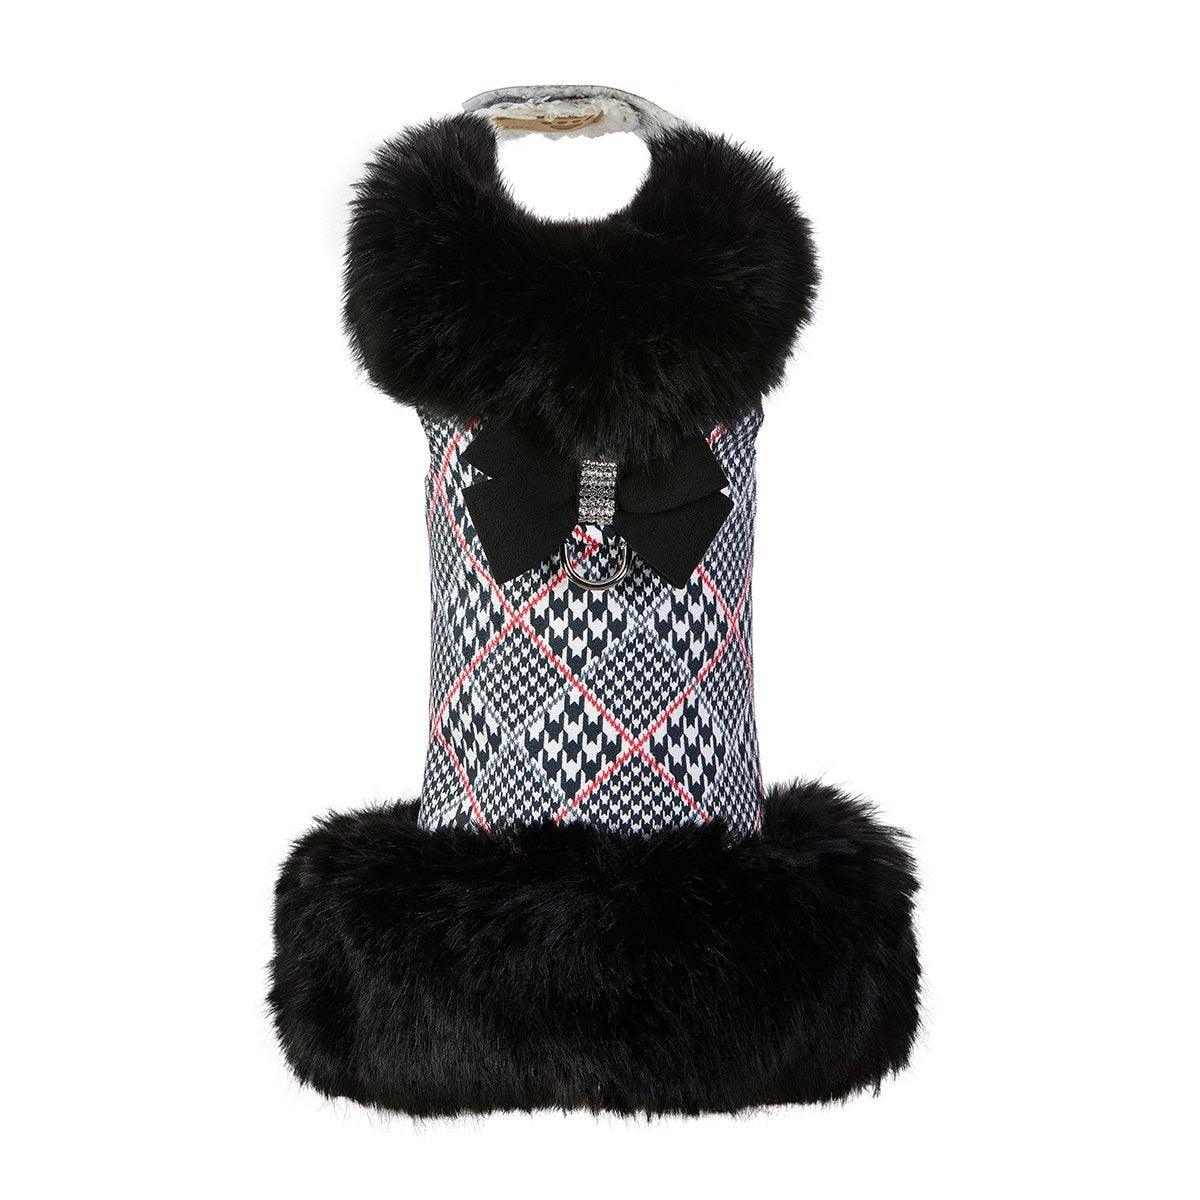 Glen Houndstooth Black Fur Coat - Rocky & Maggie's Pet Boutique and Salon